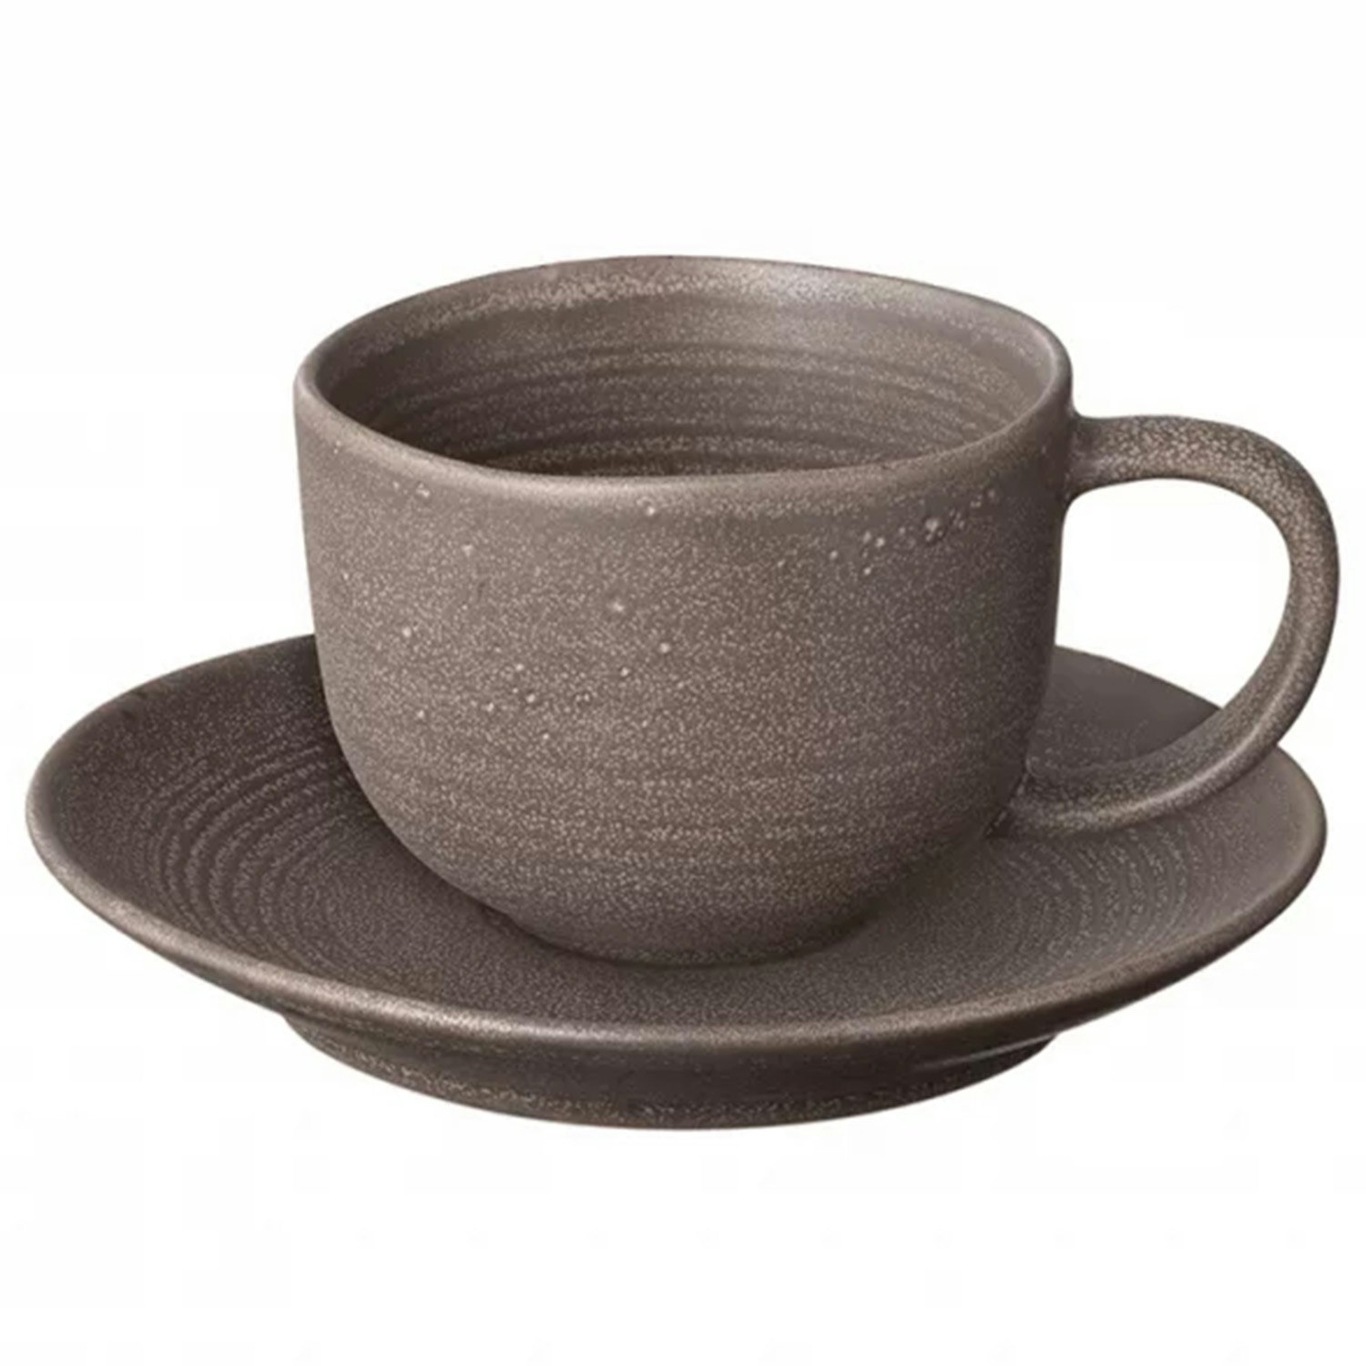 https://royaldesign.com/image/2/blomus-kumi-set-of-2-coffee-cups-190-ml-espresso-0?w=800&quality=80